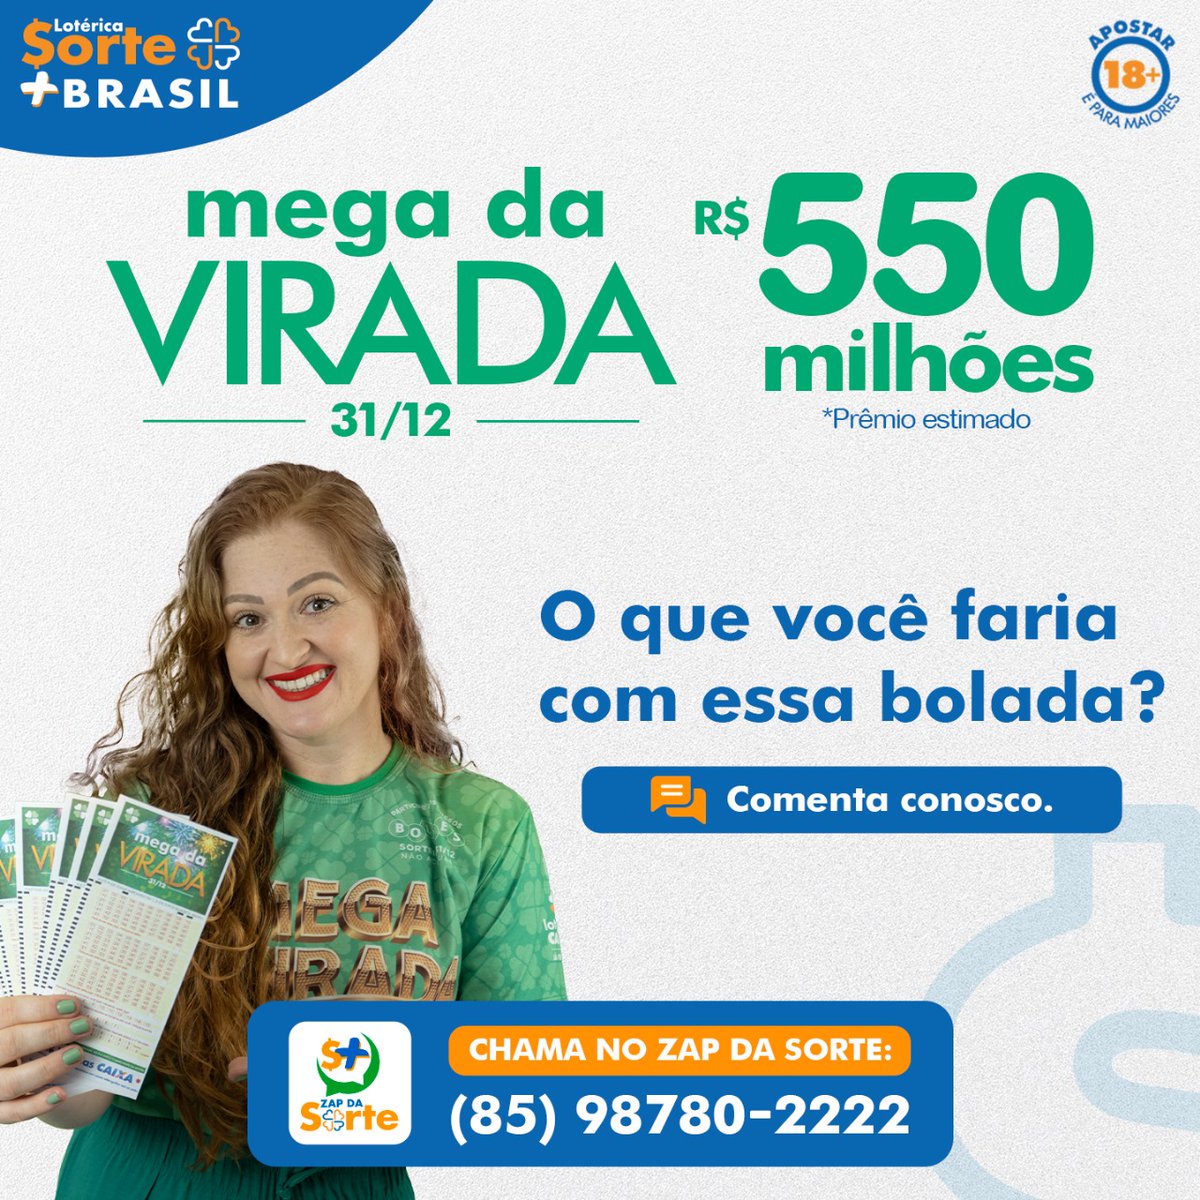 Loterica Sorte mais Brasil (@sortemaisbrasil) / X